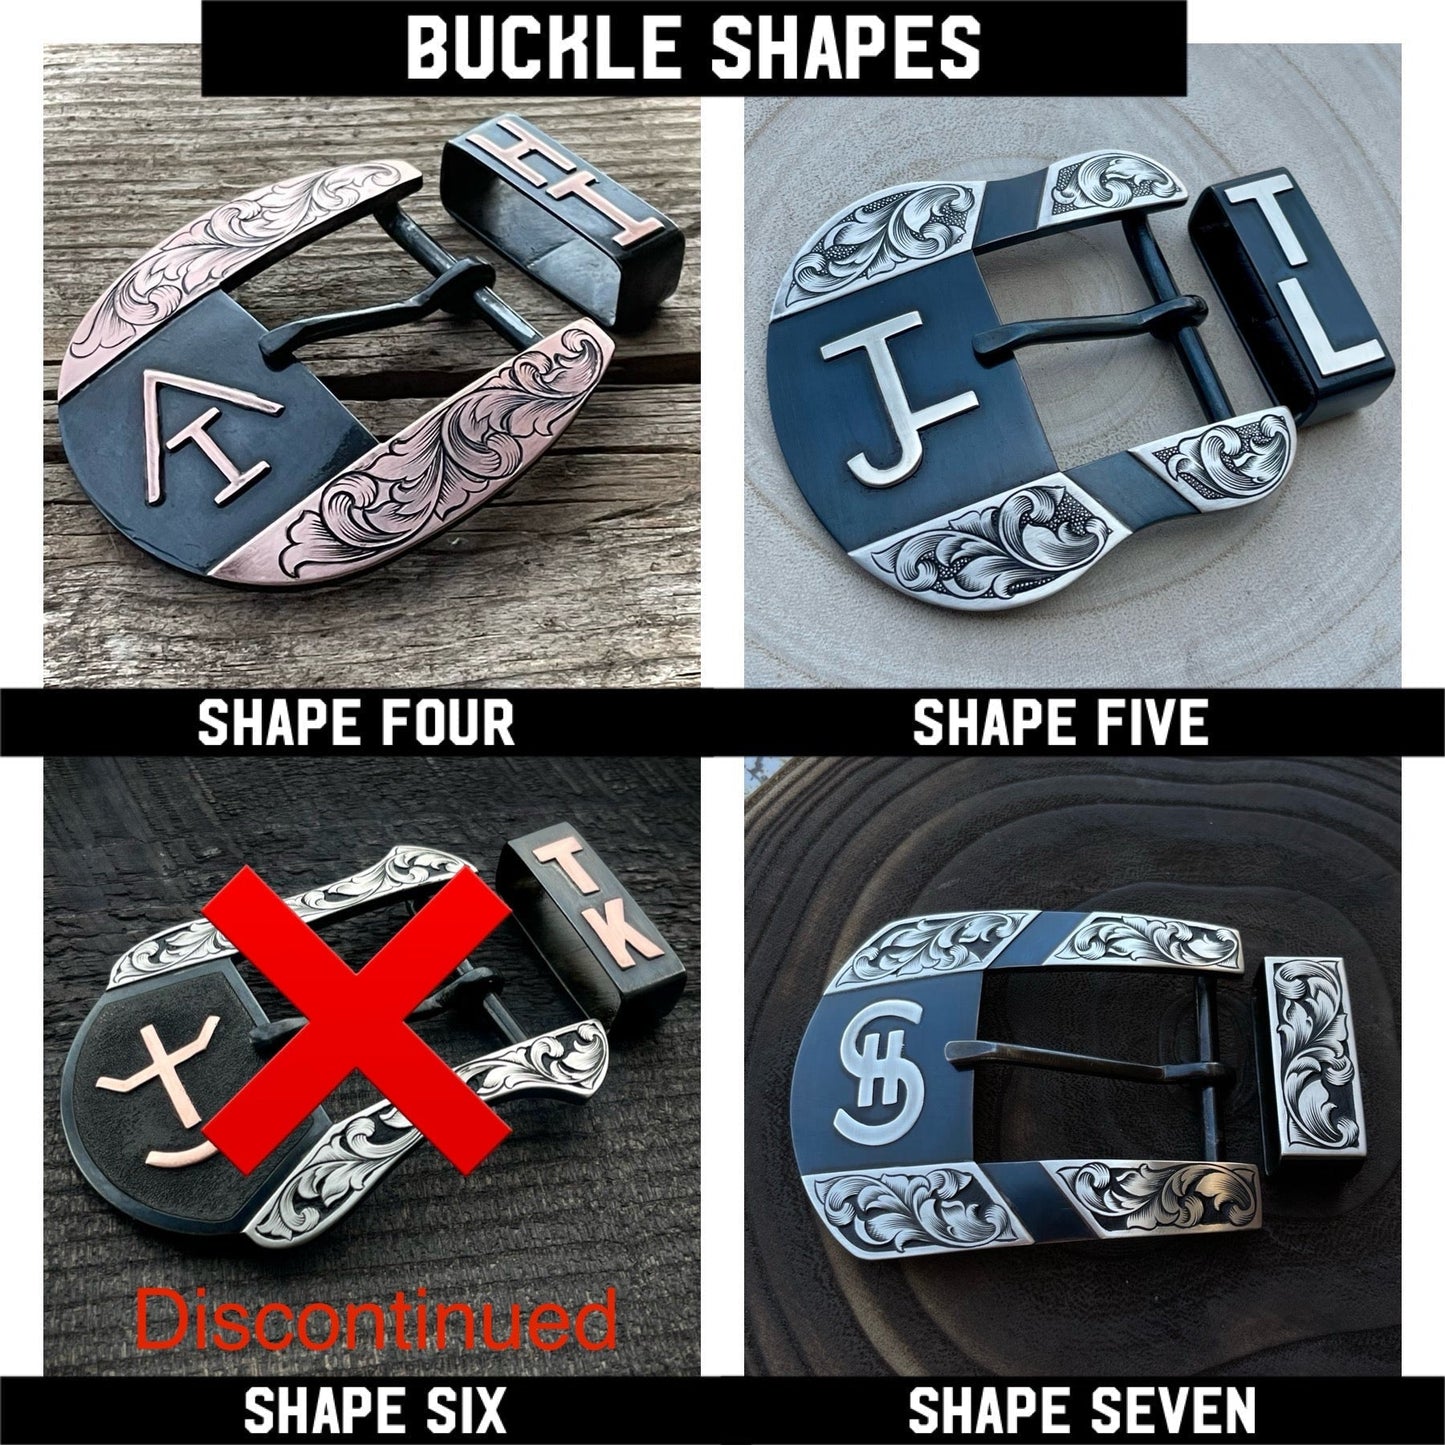 Custom Western Belt Buckle - Boles Silver - Buckle shape options